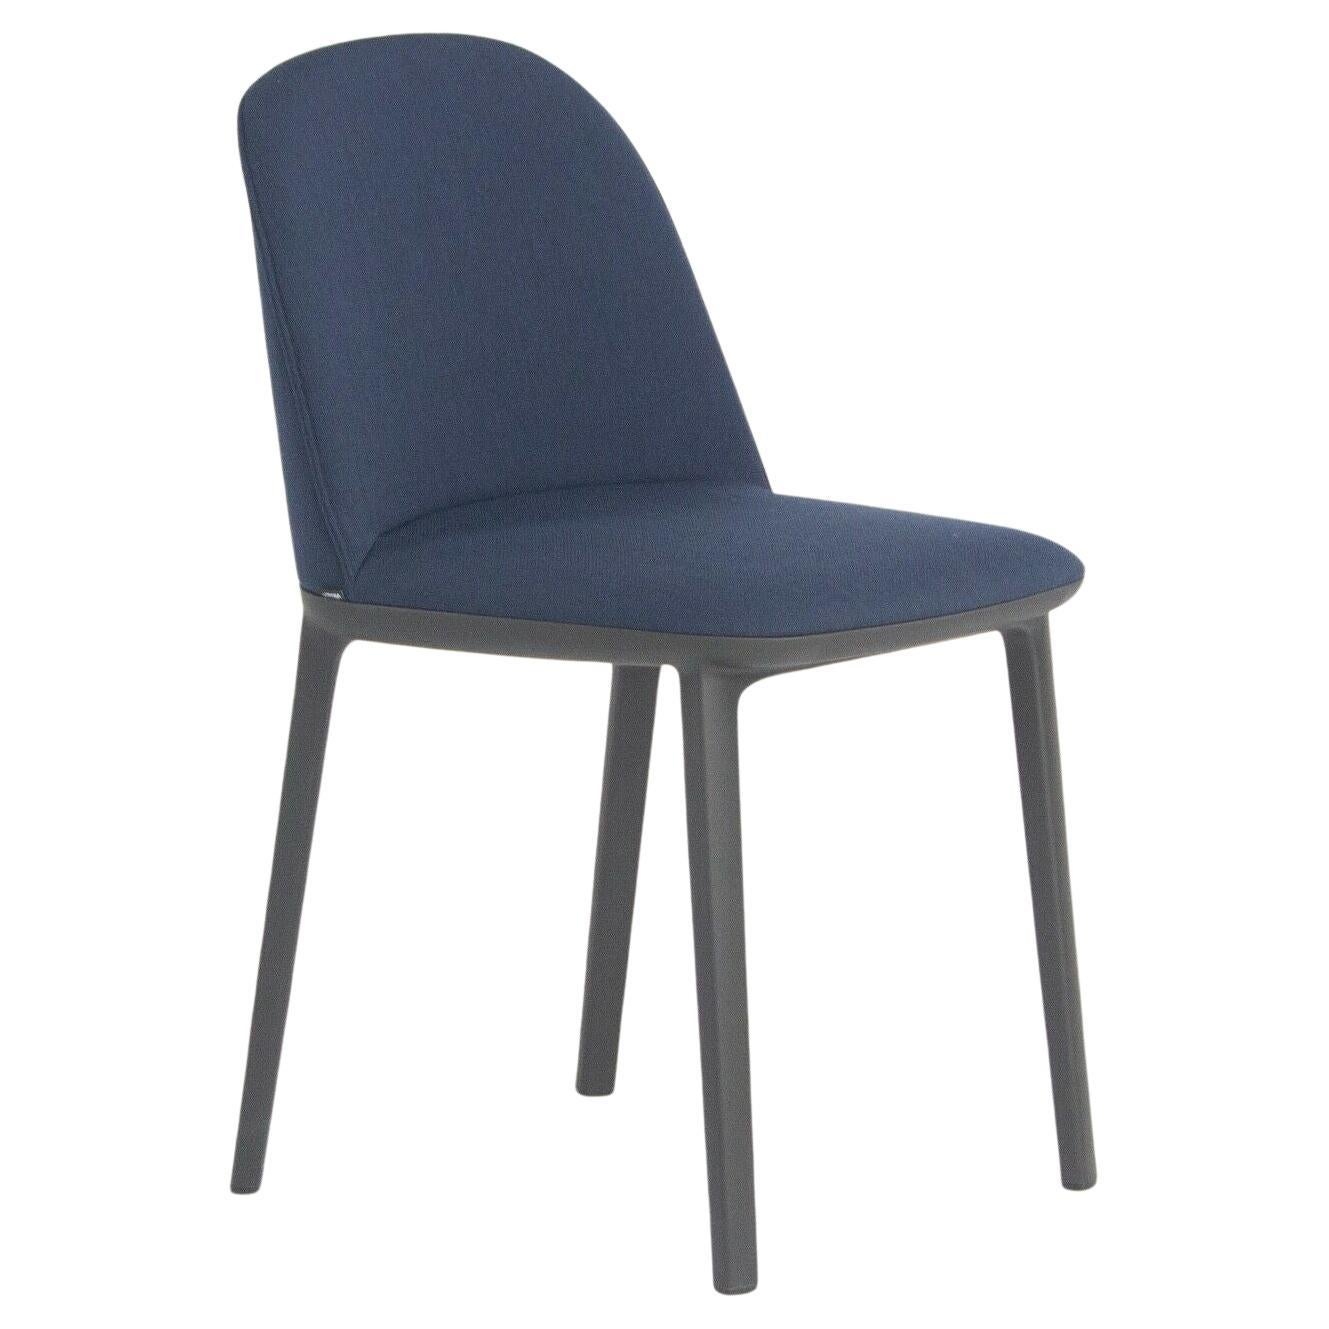 Chaise d'appoint Vitra Softshell avec tissu bleu foncé de Ronan & Erwan Bouroullec, 2018